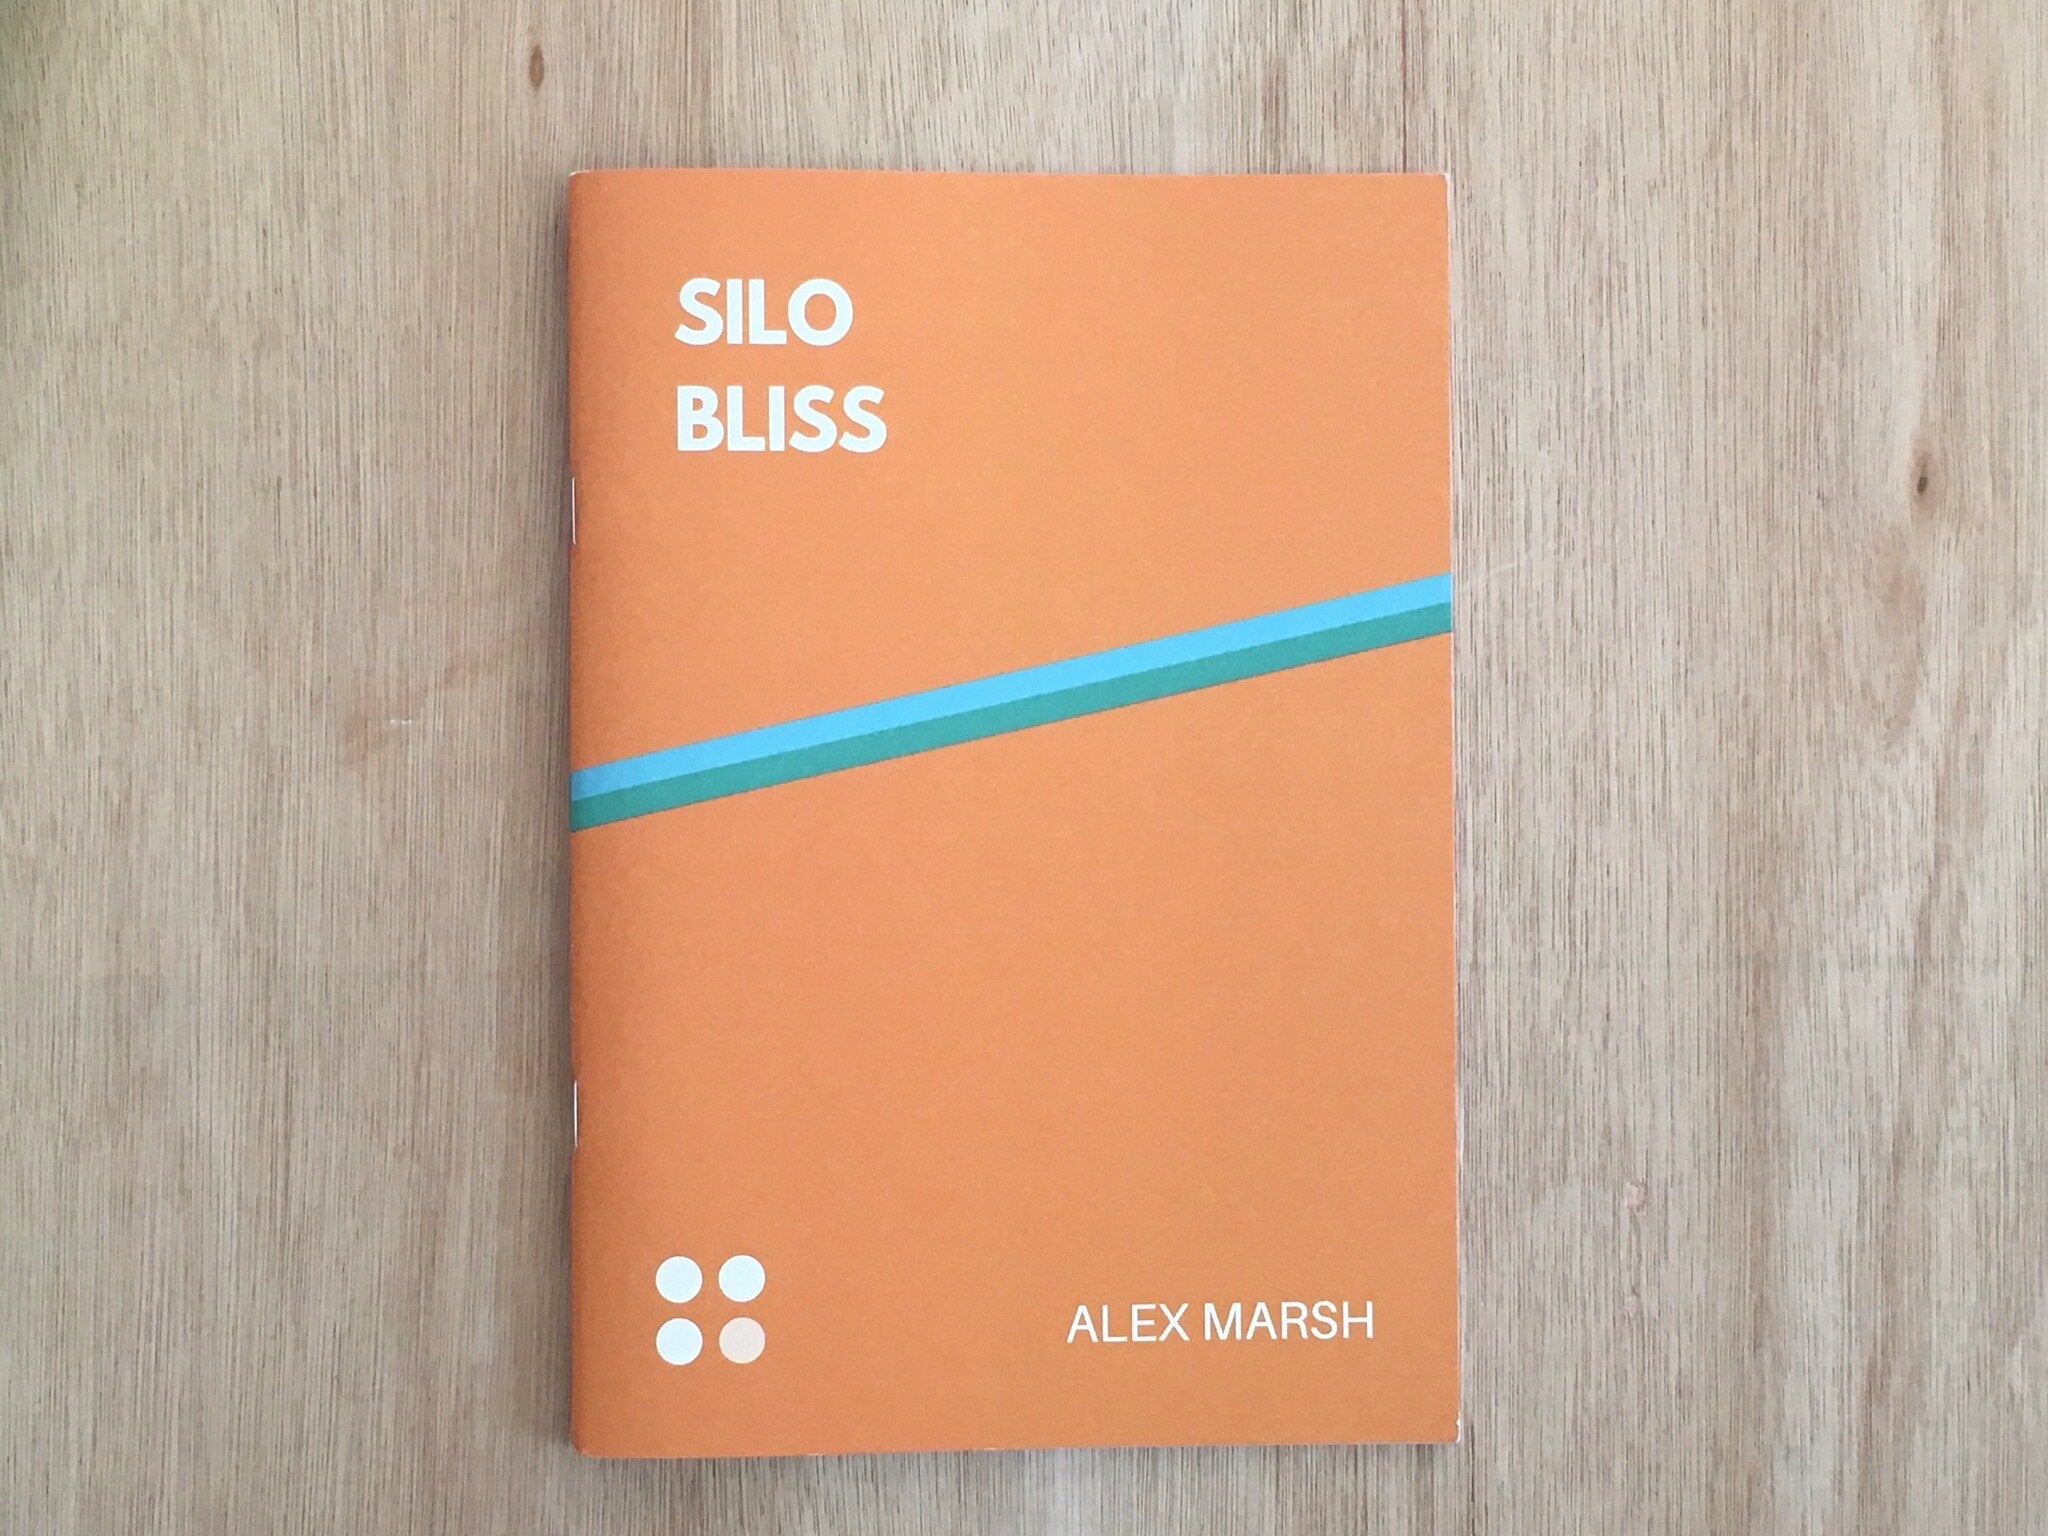 SILO BLISS by Alex Marsh